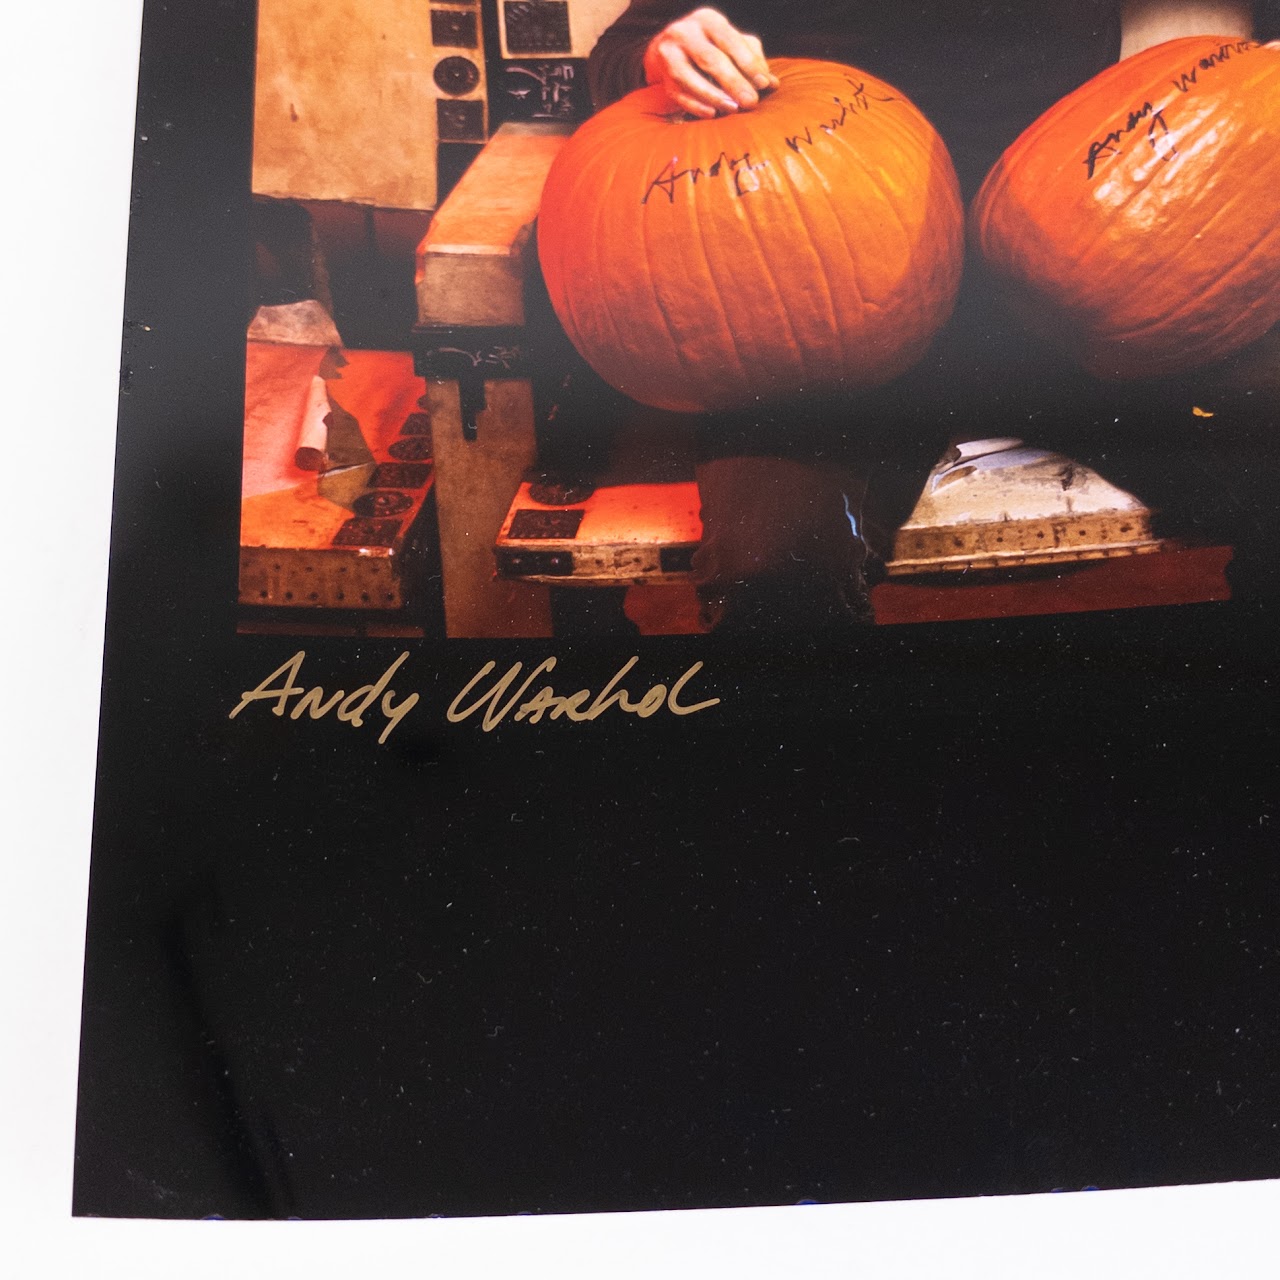 Mario Ruiz  " Andy Warhol with Pumpkins" Photograph